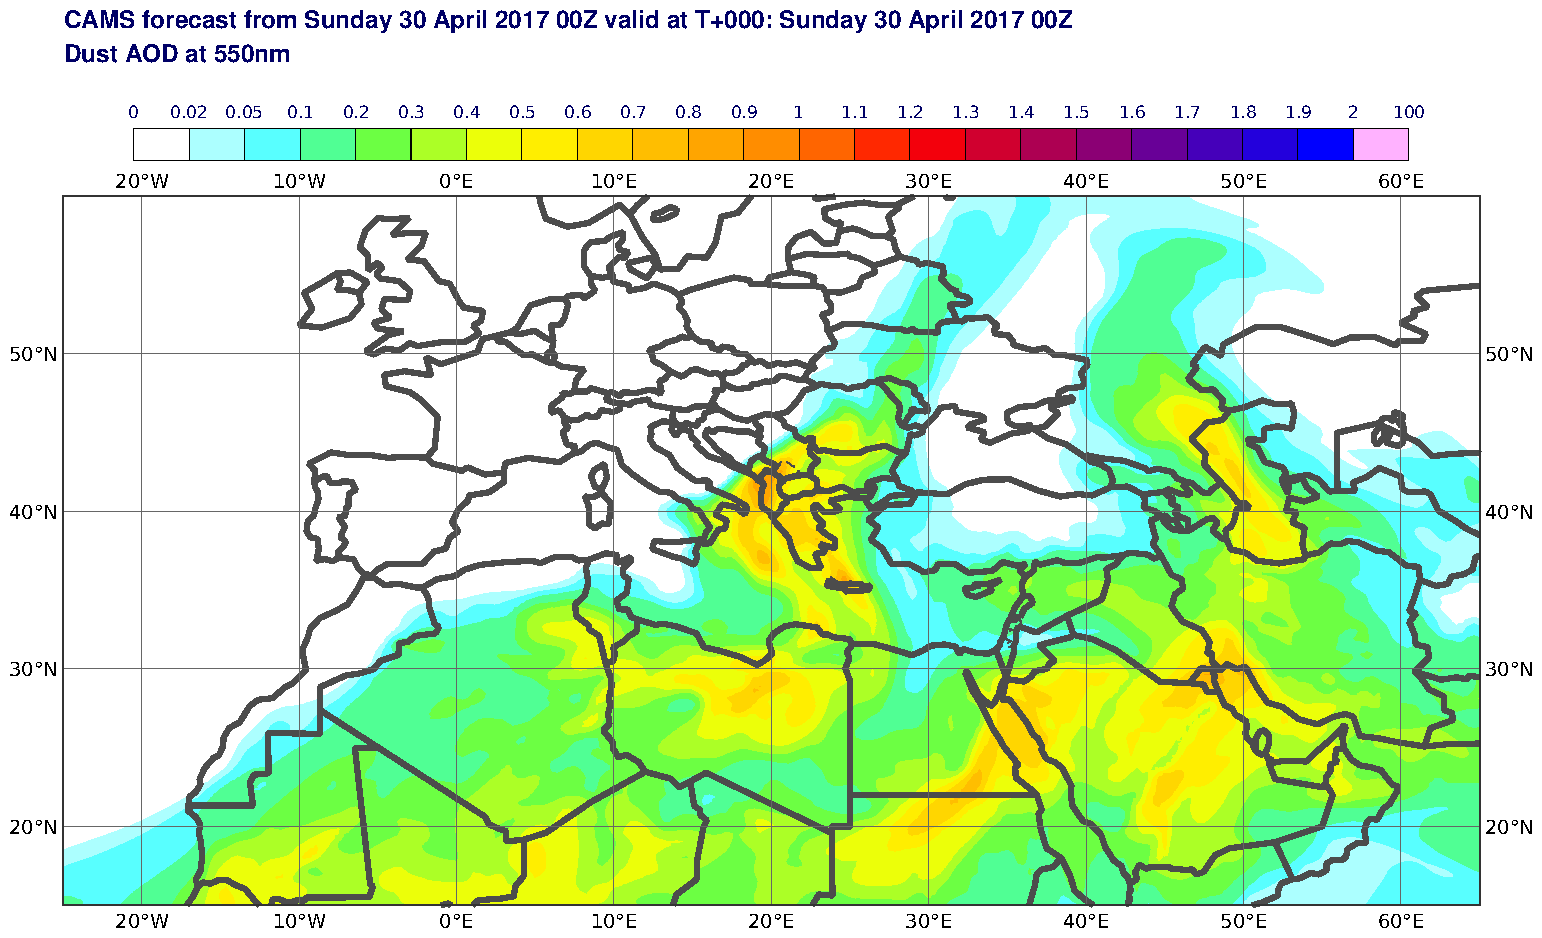 Dust AOD at 550nm valid at T0 - 2017-04-30 00:00